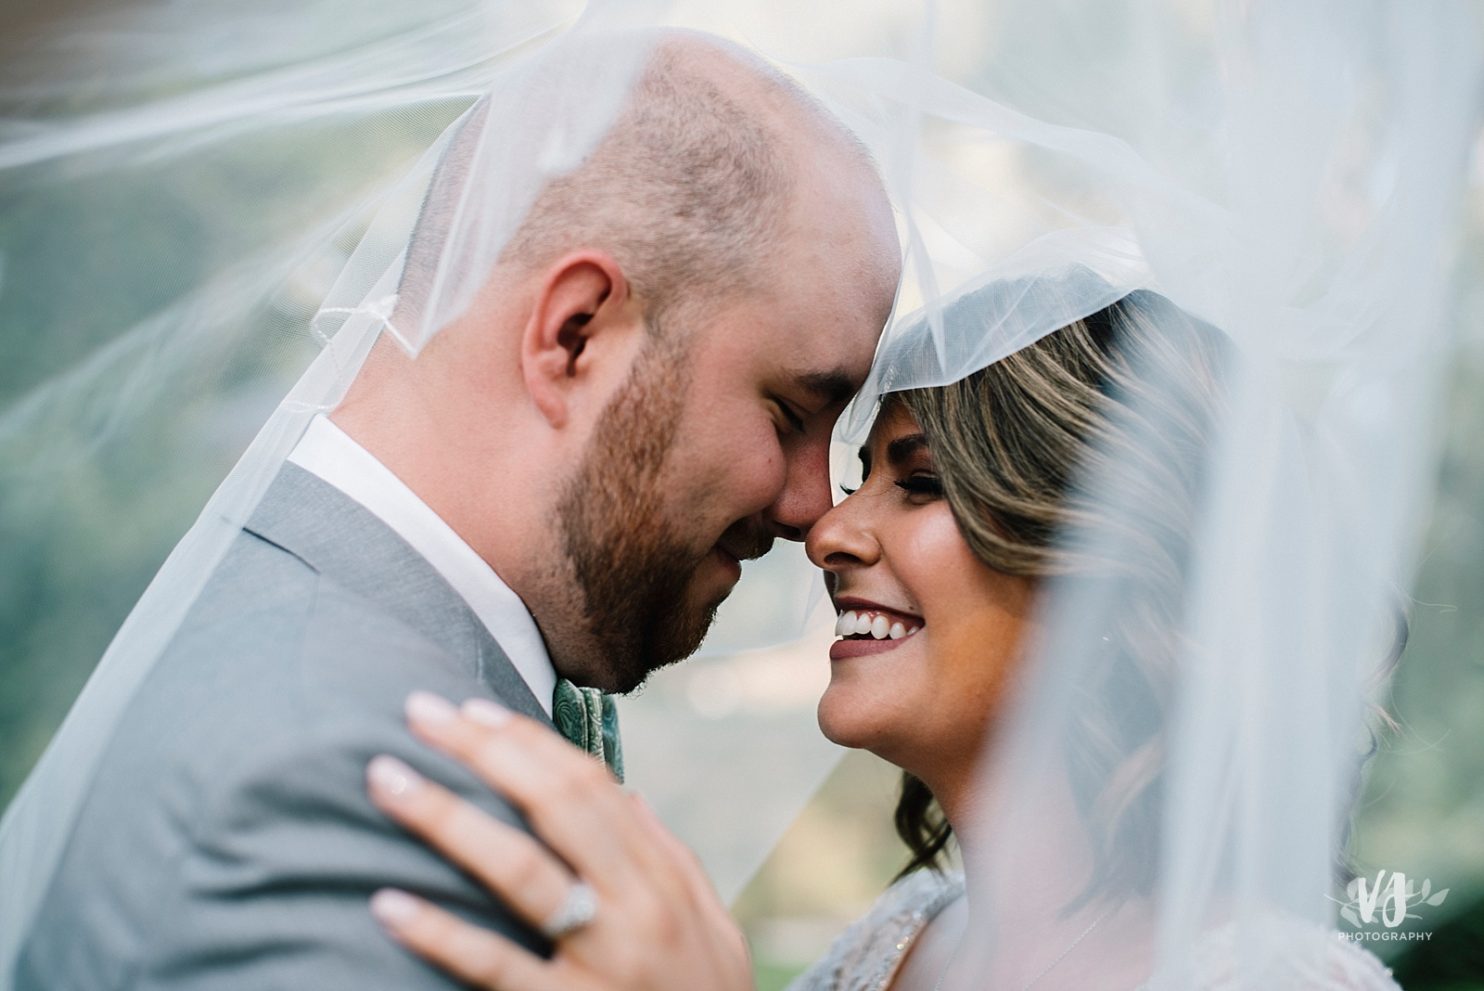 Alex + Morgan | Cincinnati Wedding Photographer - Veritas Studio